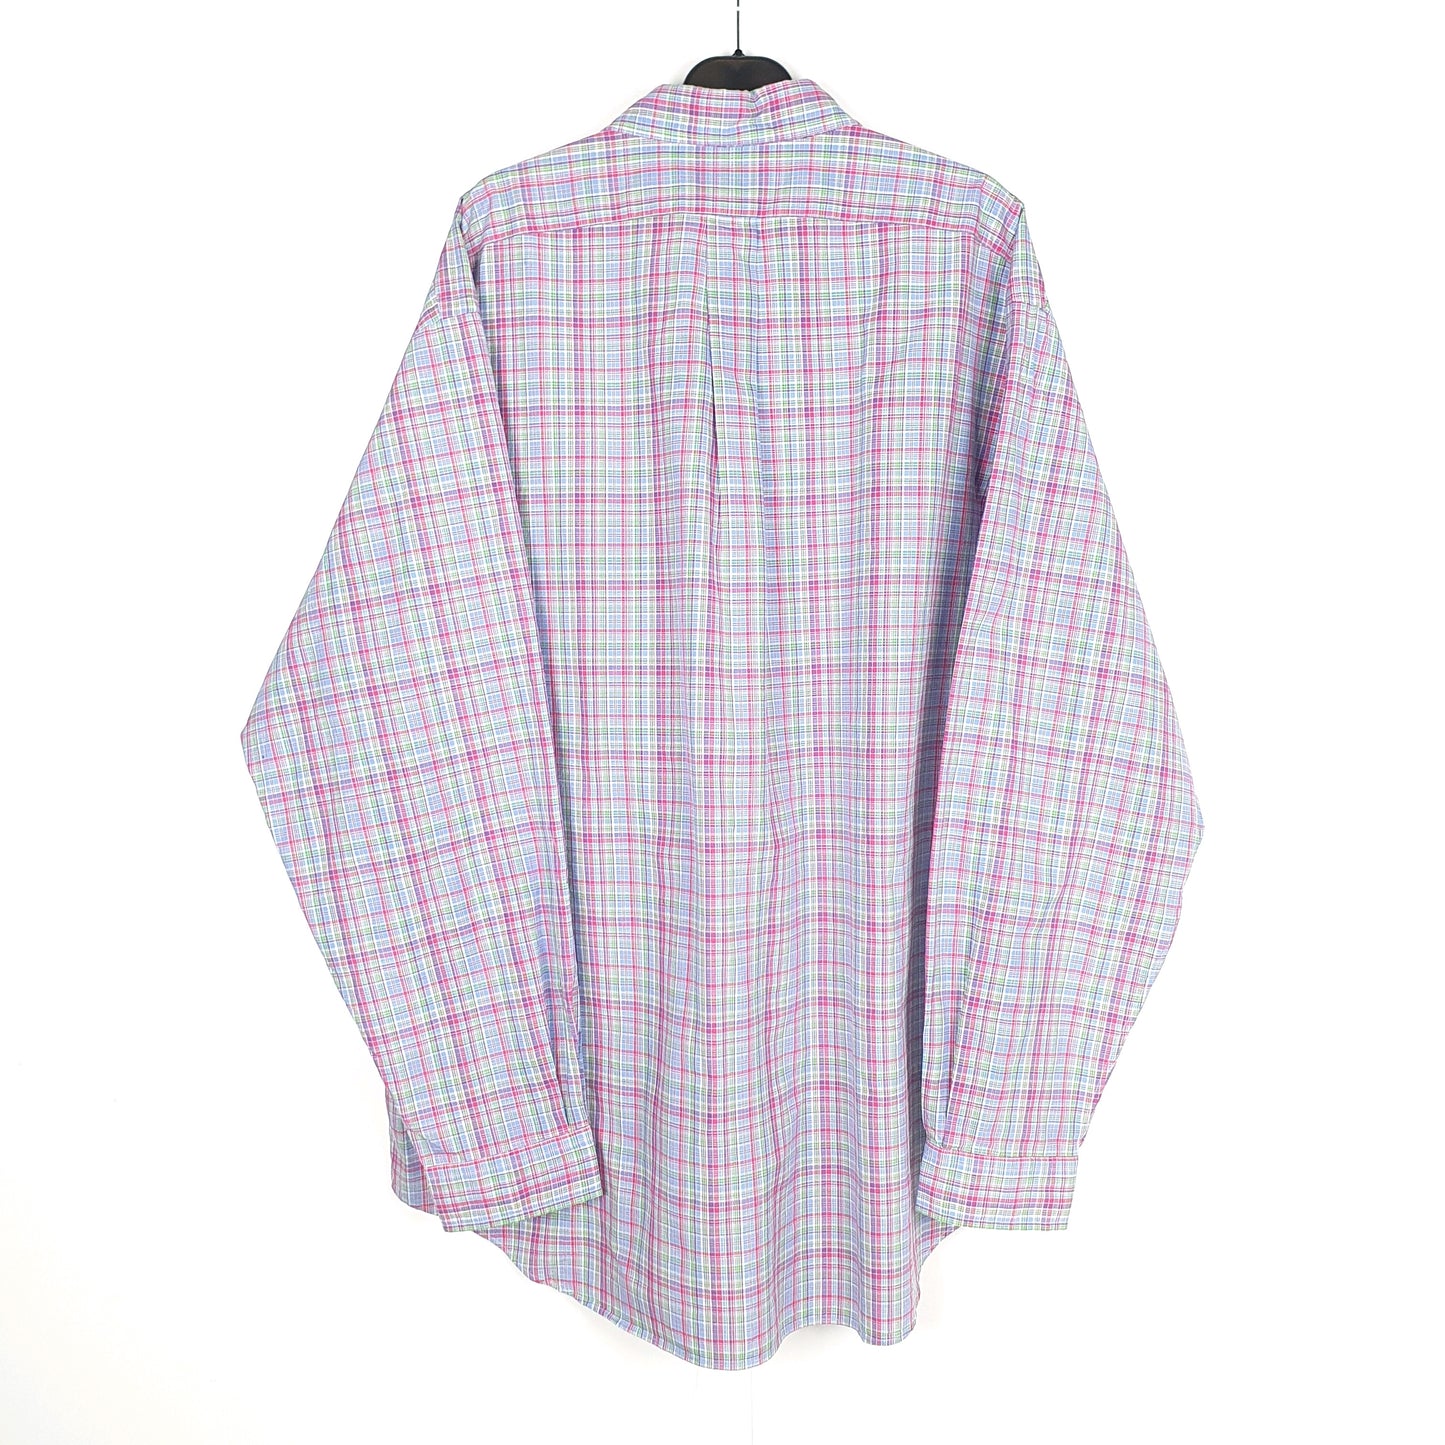 Polo Ralph Lauren Long Sleeve Classic Fit Check Shirt